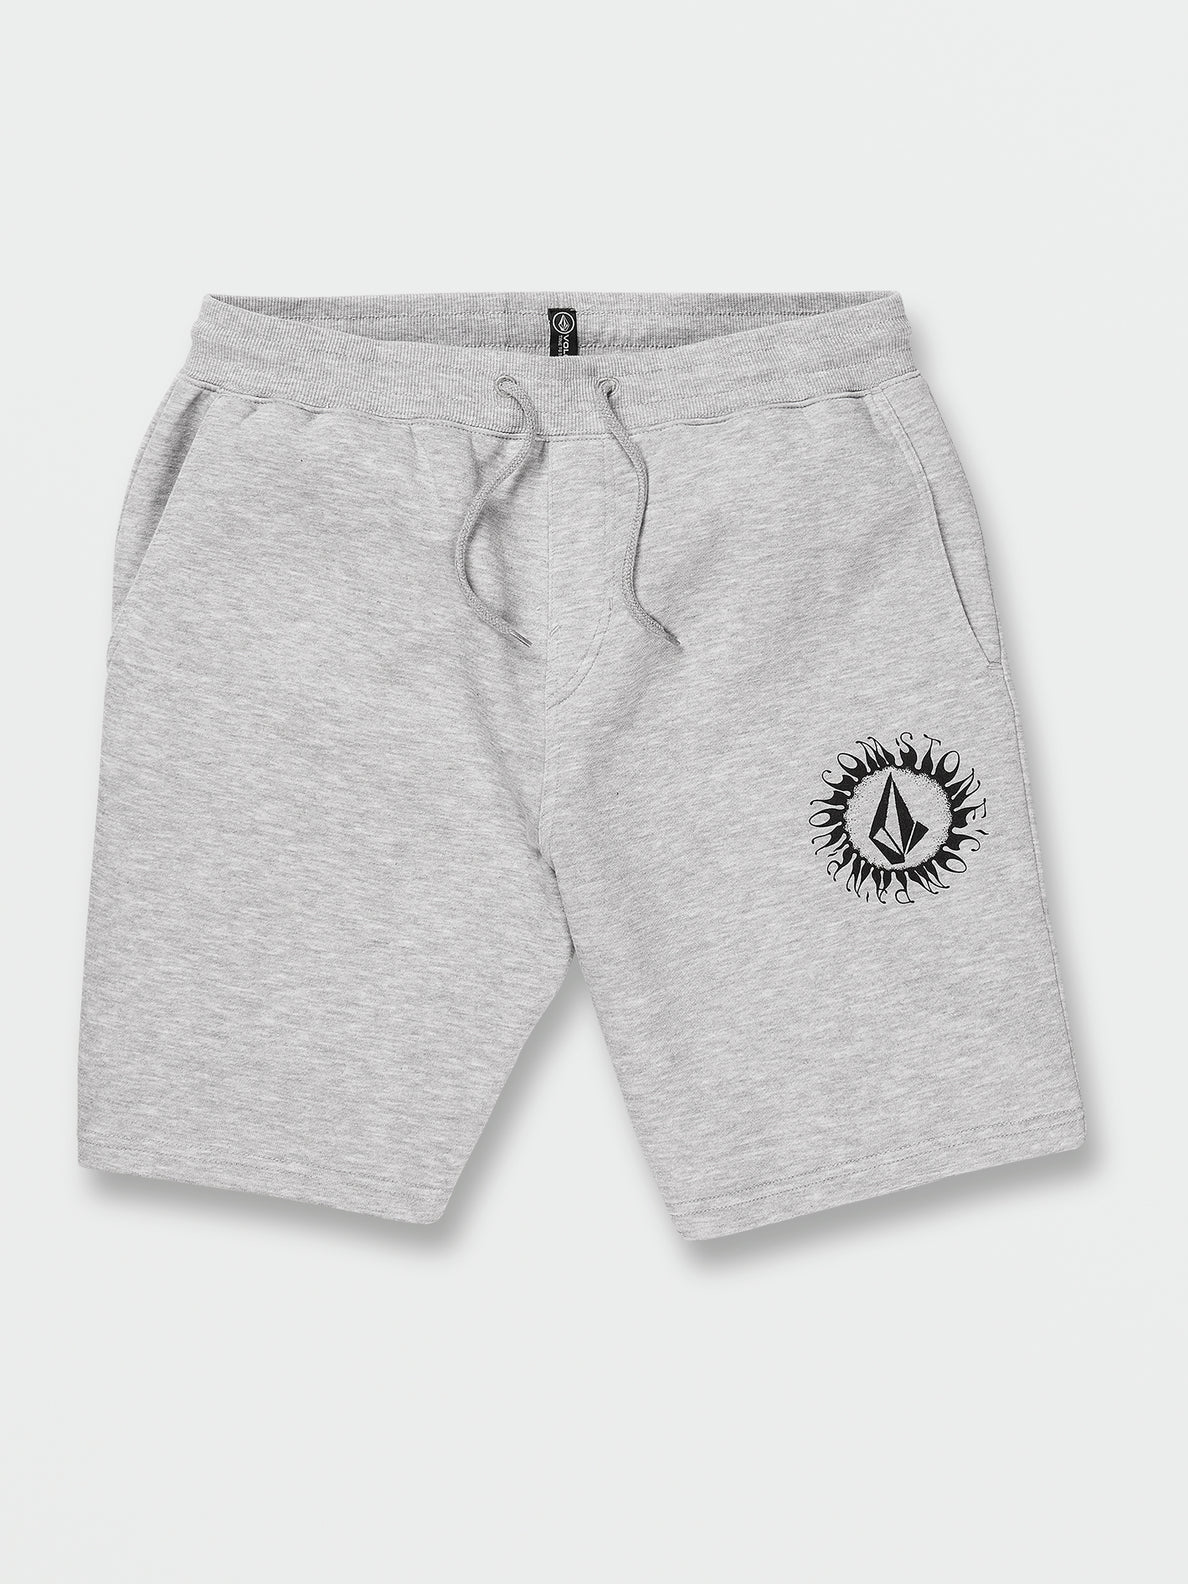 Grey Athletic Fleece Shorts